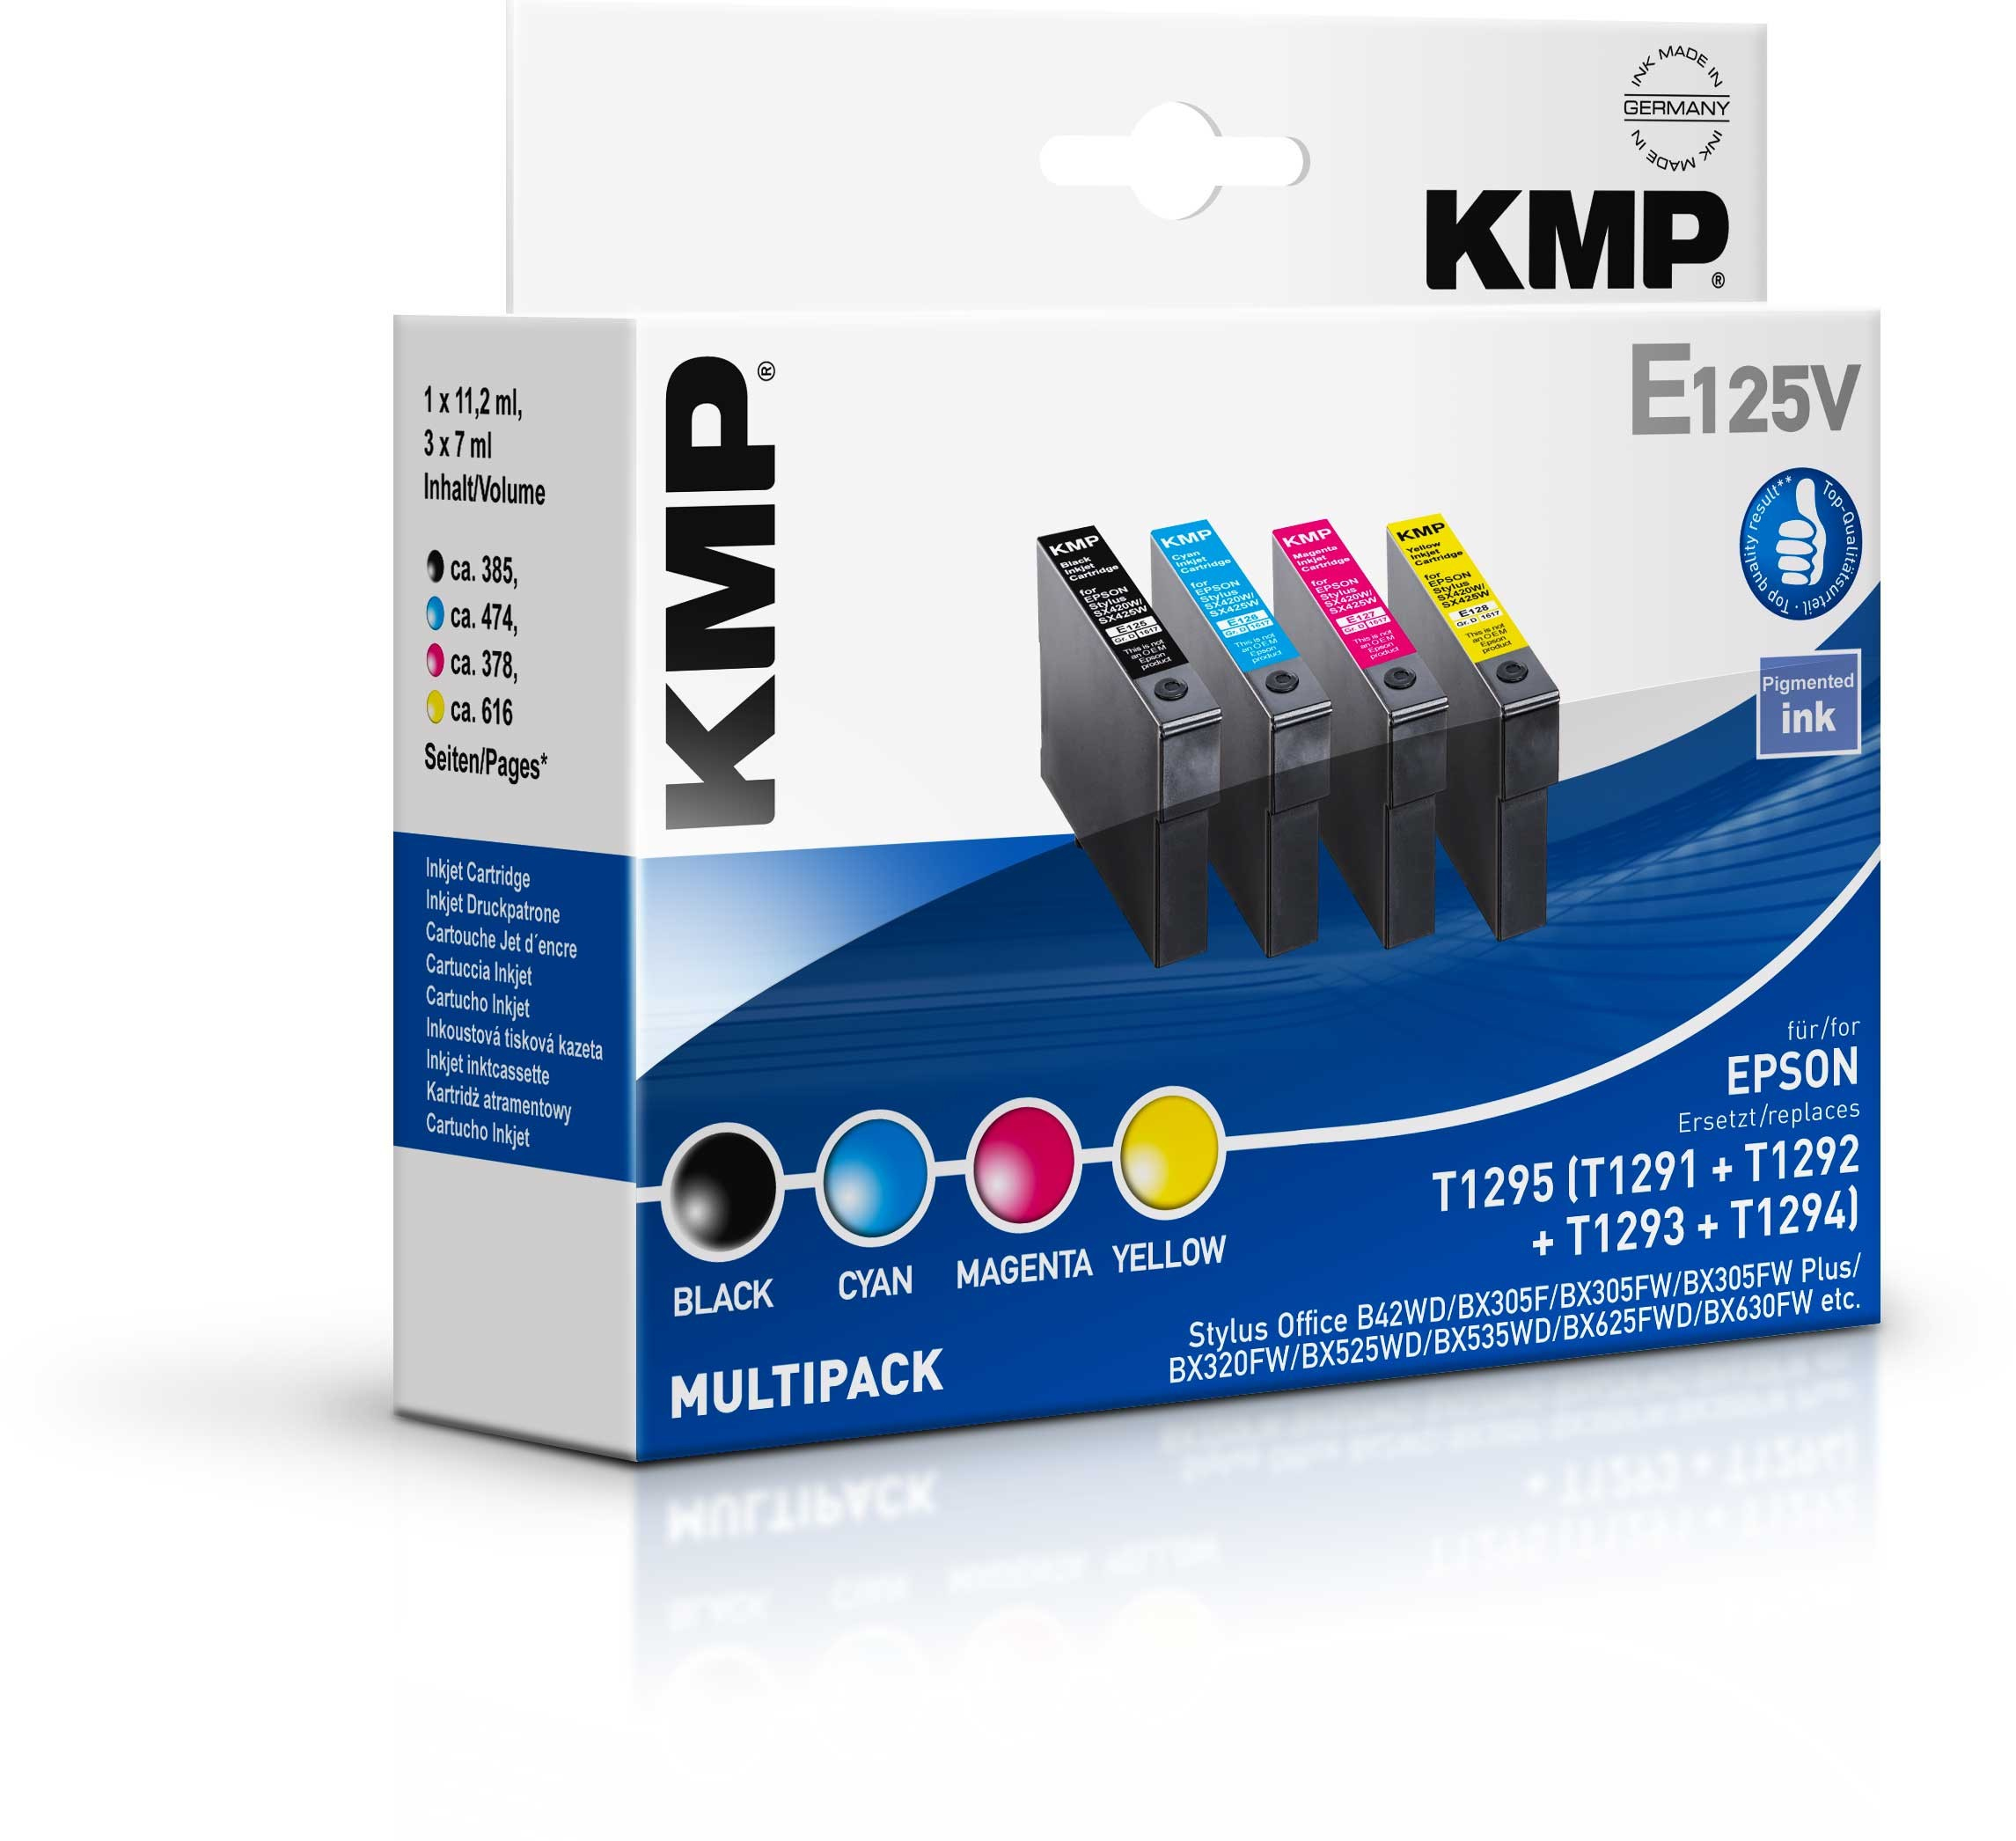 KMP E125V multi pack / cyaan, geel, magenta, zwart